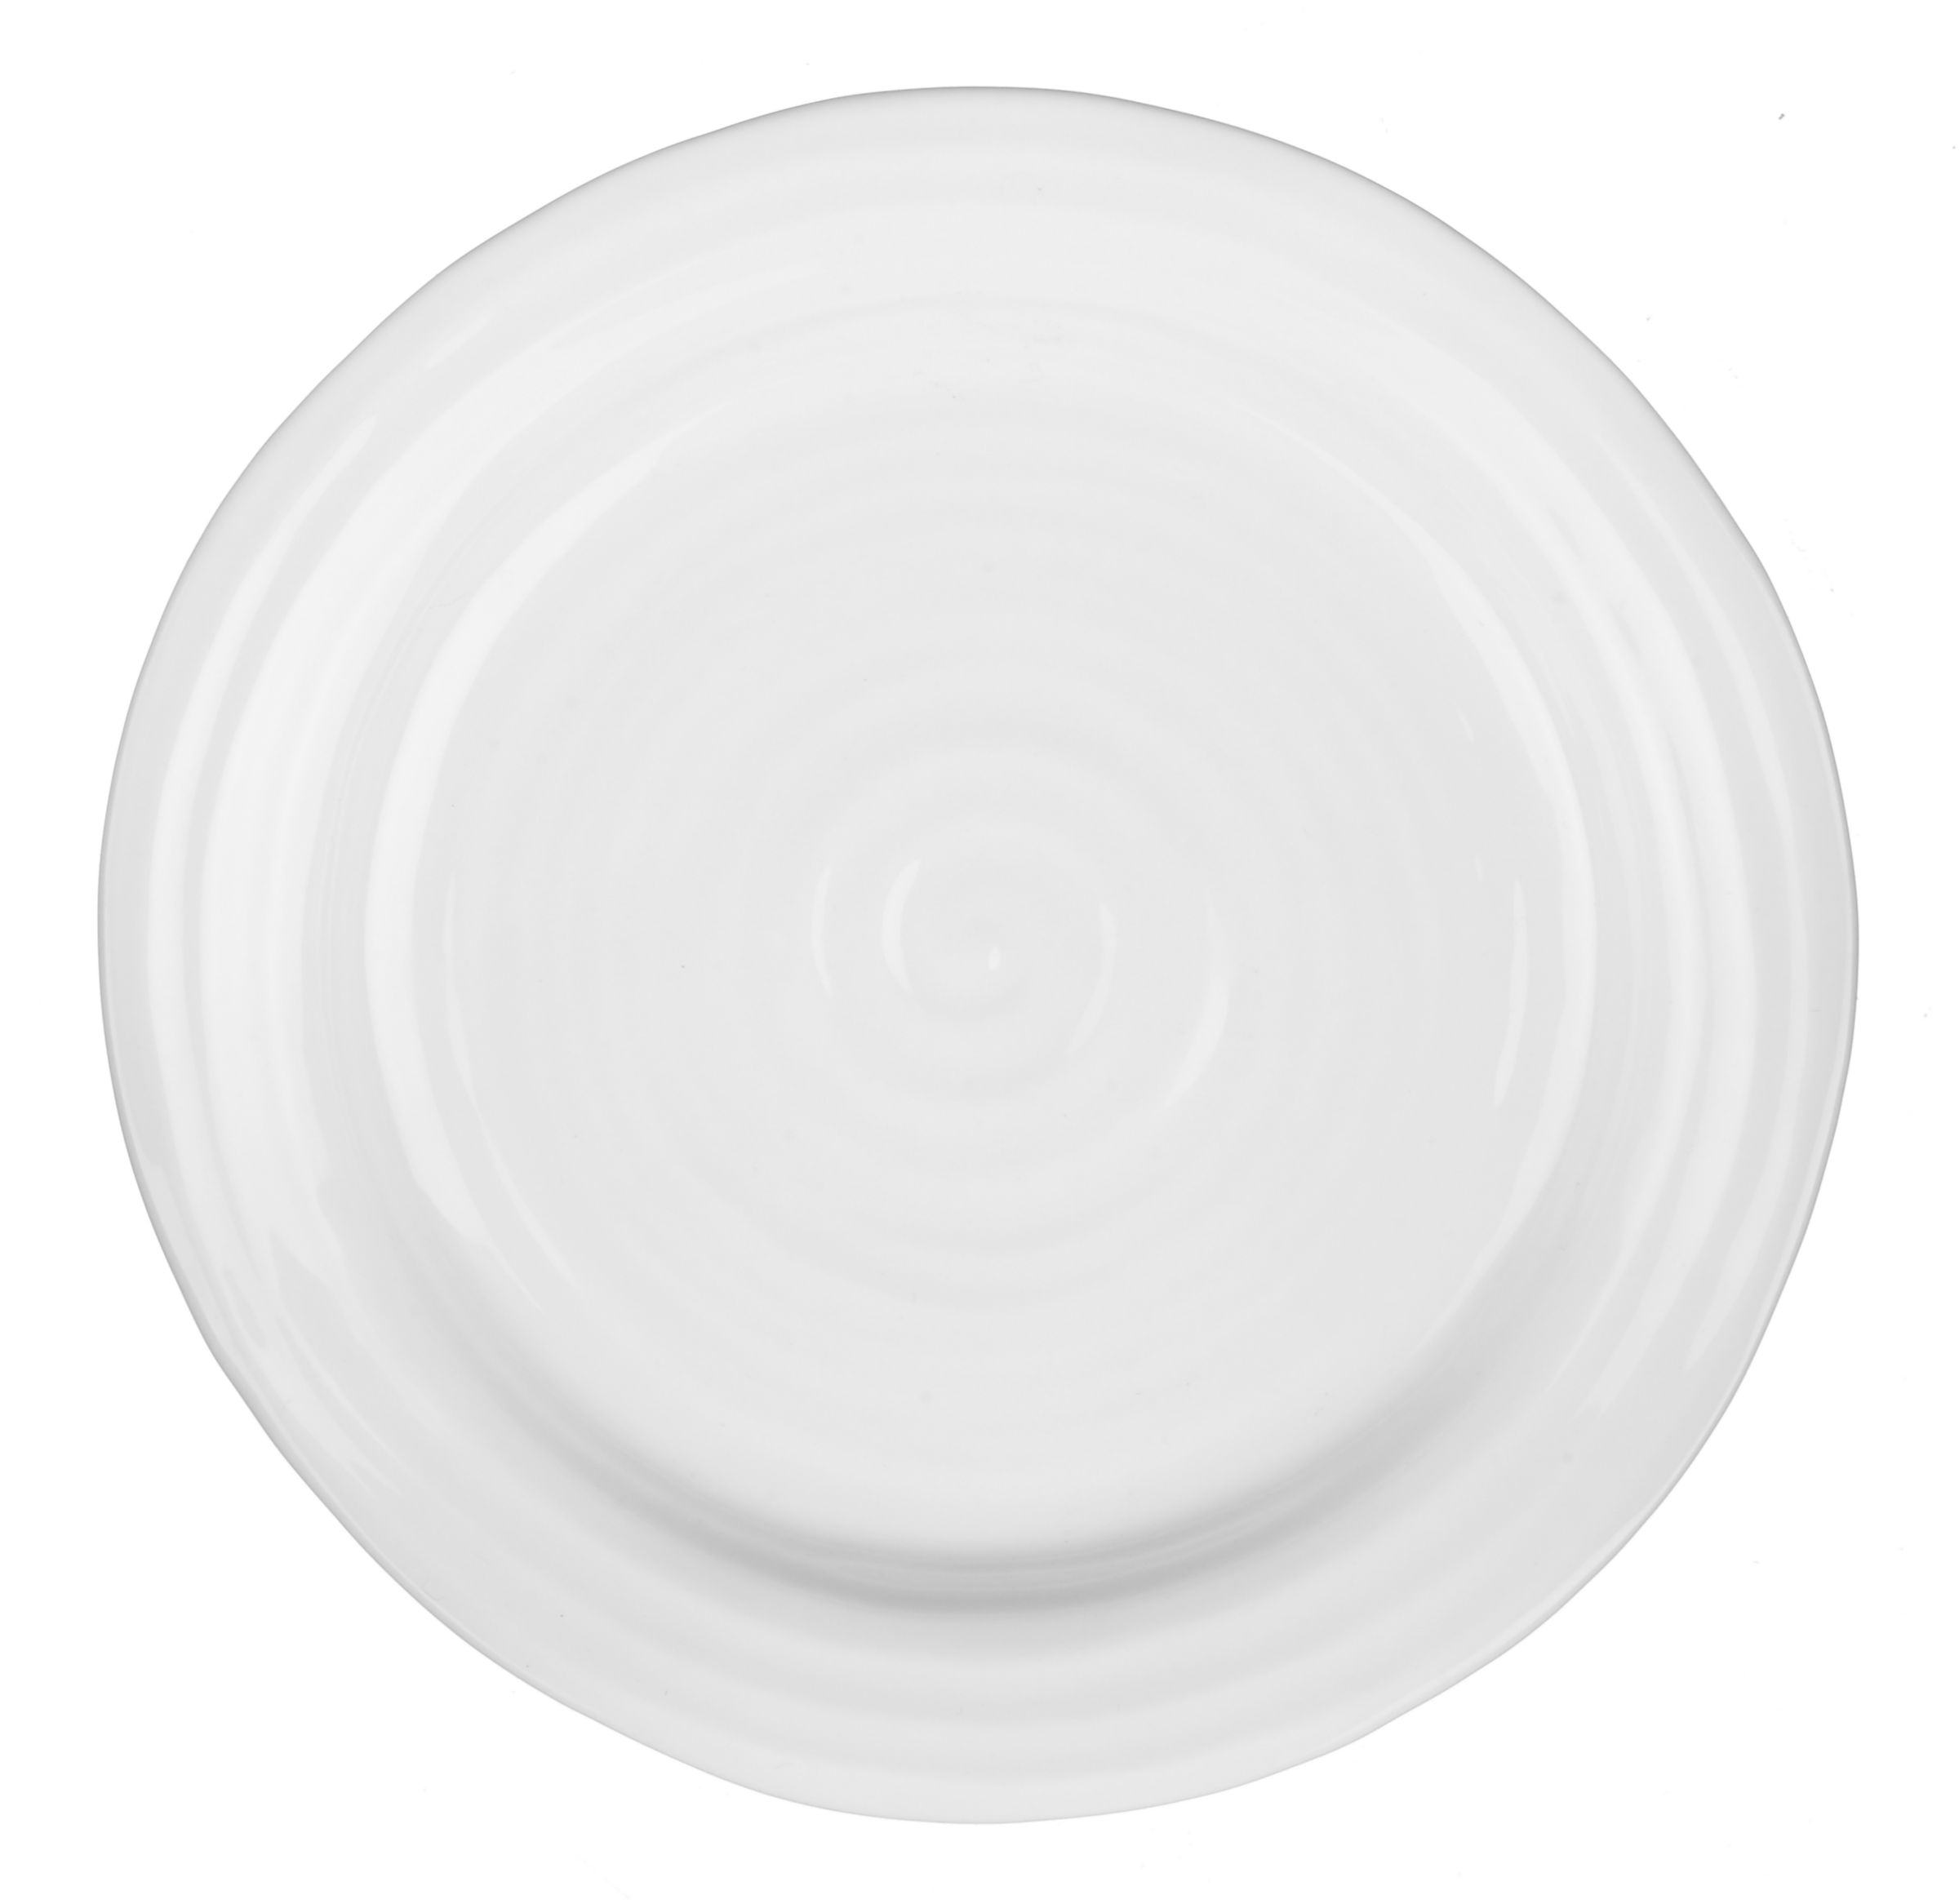 Sophie Conran for Portmeirion Tea Plate, White,